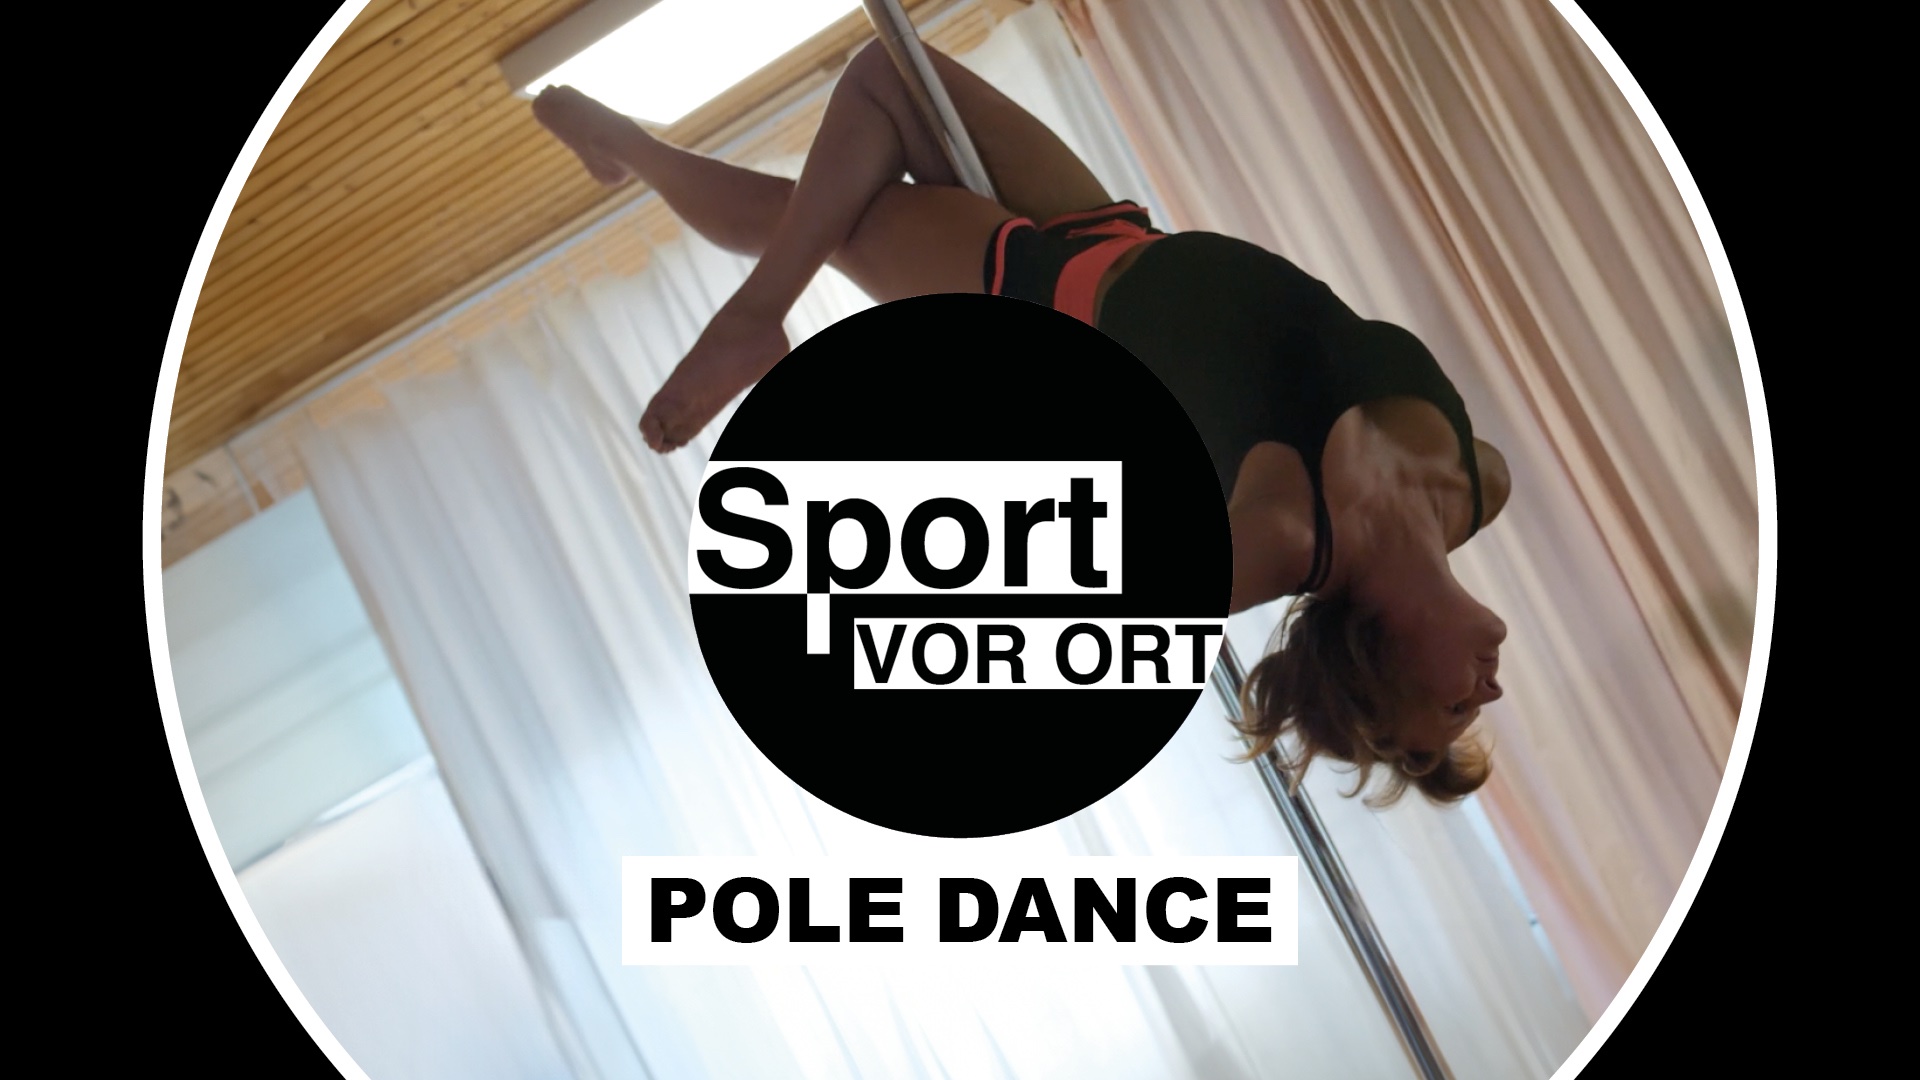 Sport vor Ort - Pole Dance